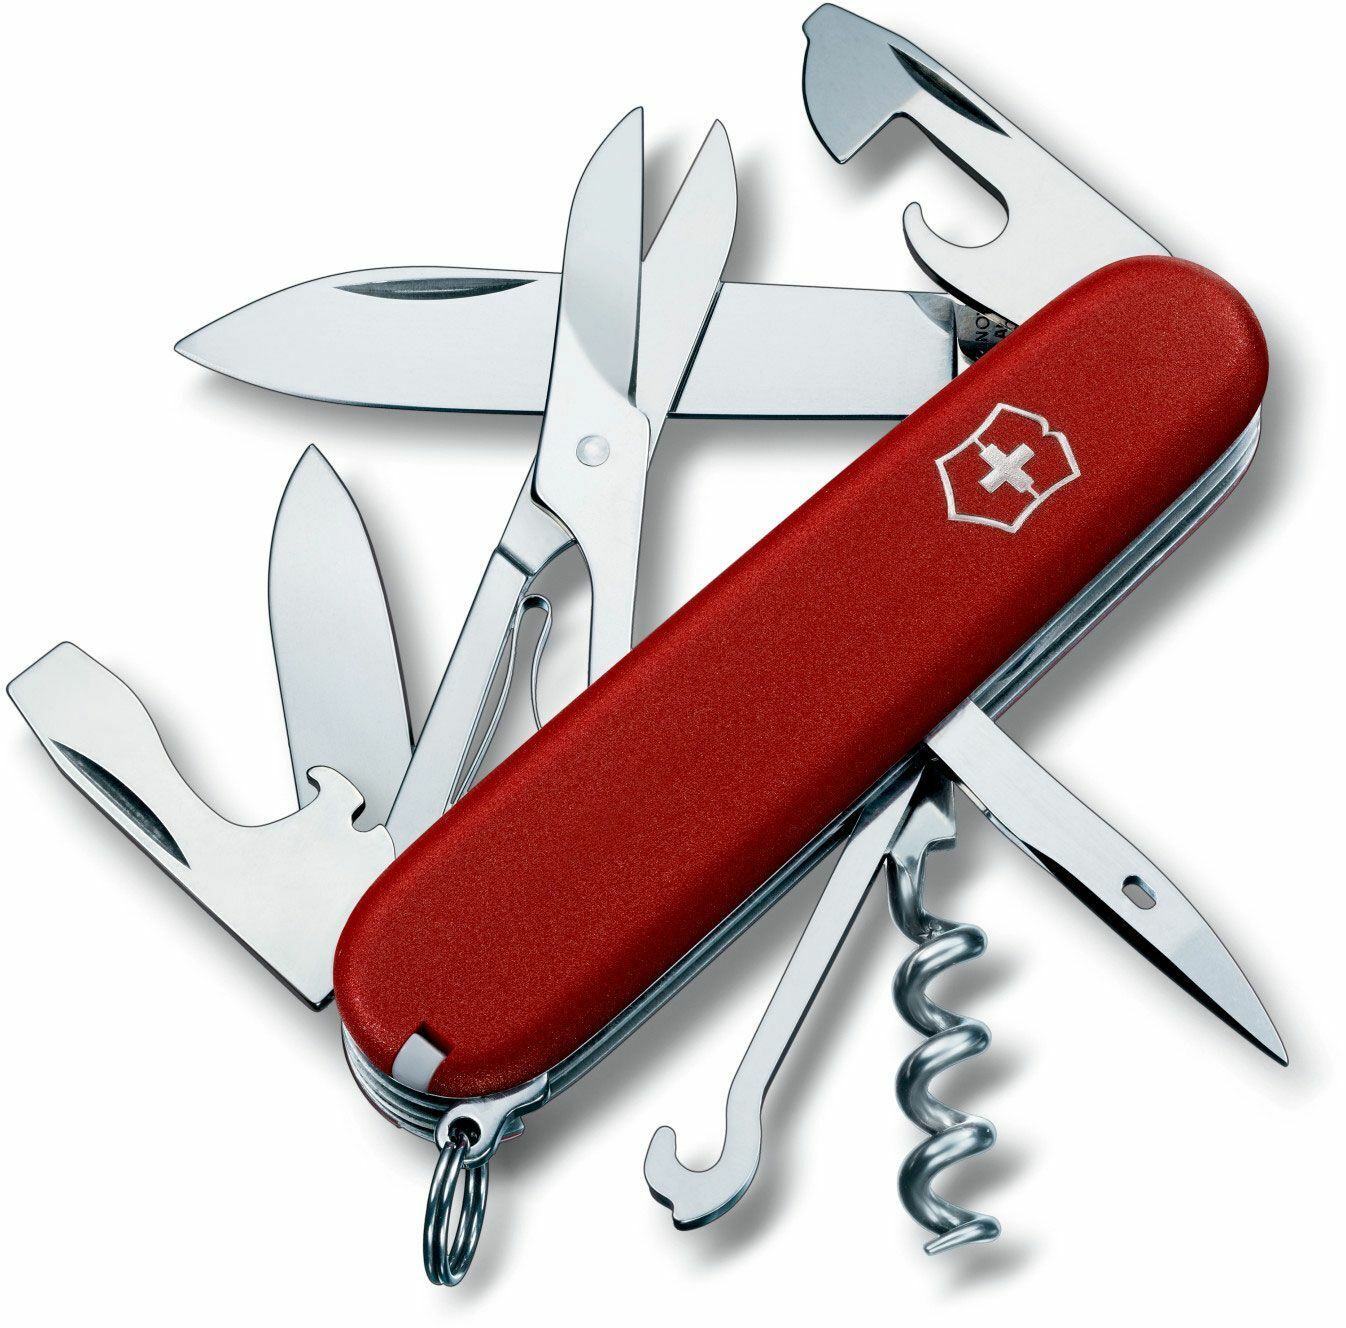 NEW SWISS ARMY 1.3703-033-X1 / 53381 RED CLIMBER VICTORINOX KNIFE MULTI TOOL